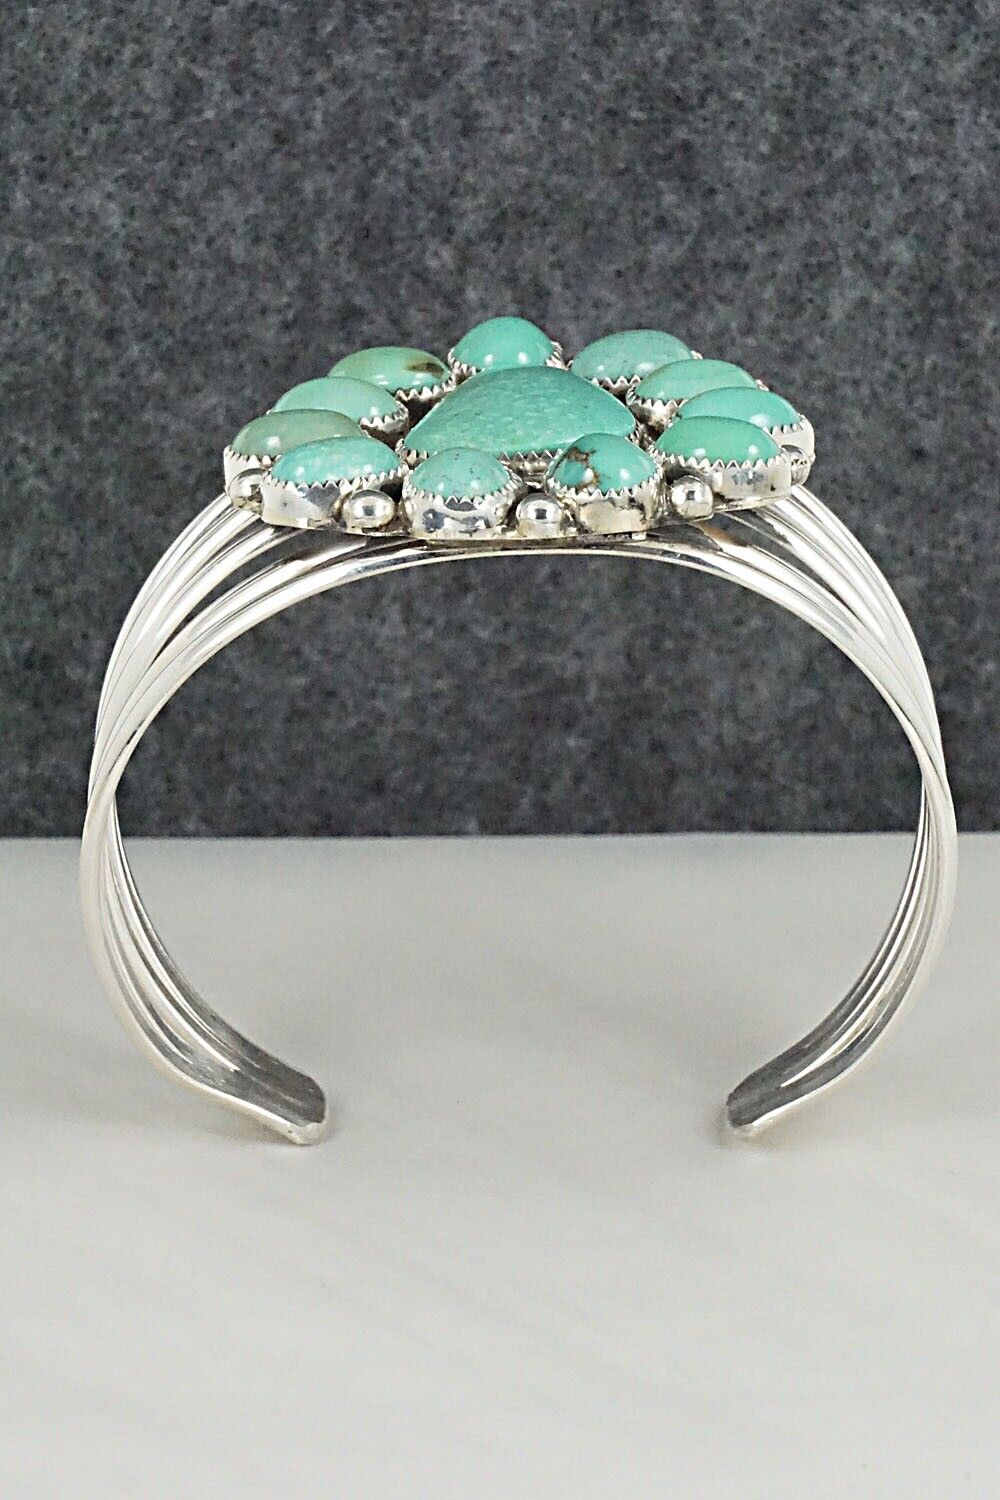 Turquoise & Sterling Silver Bracelet - Donavan Nez